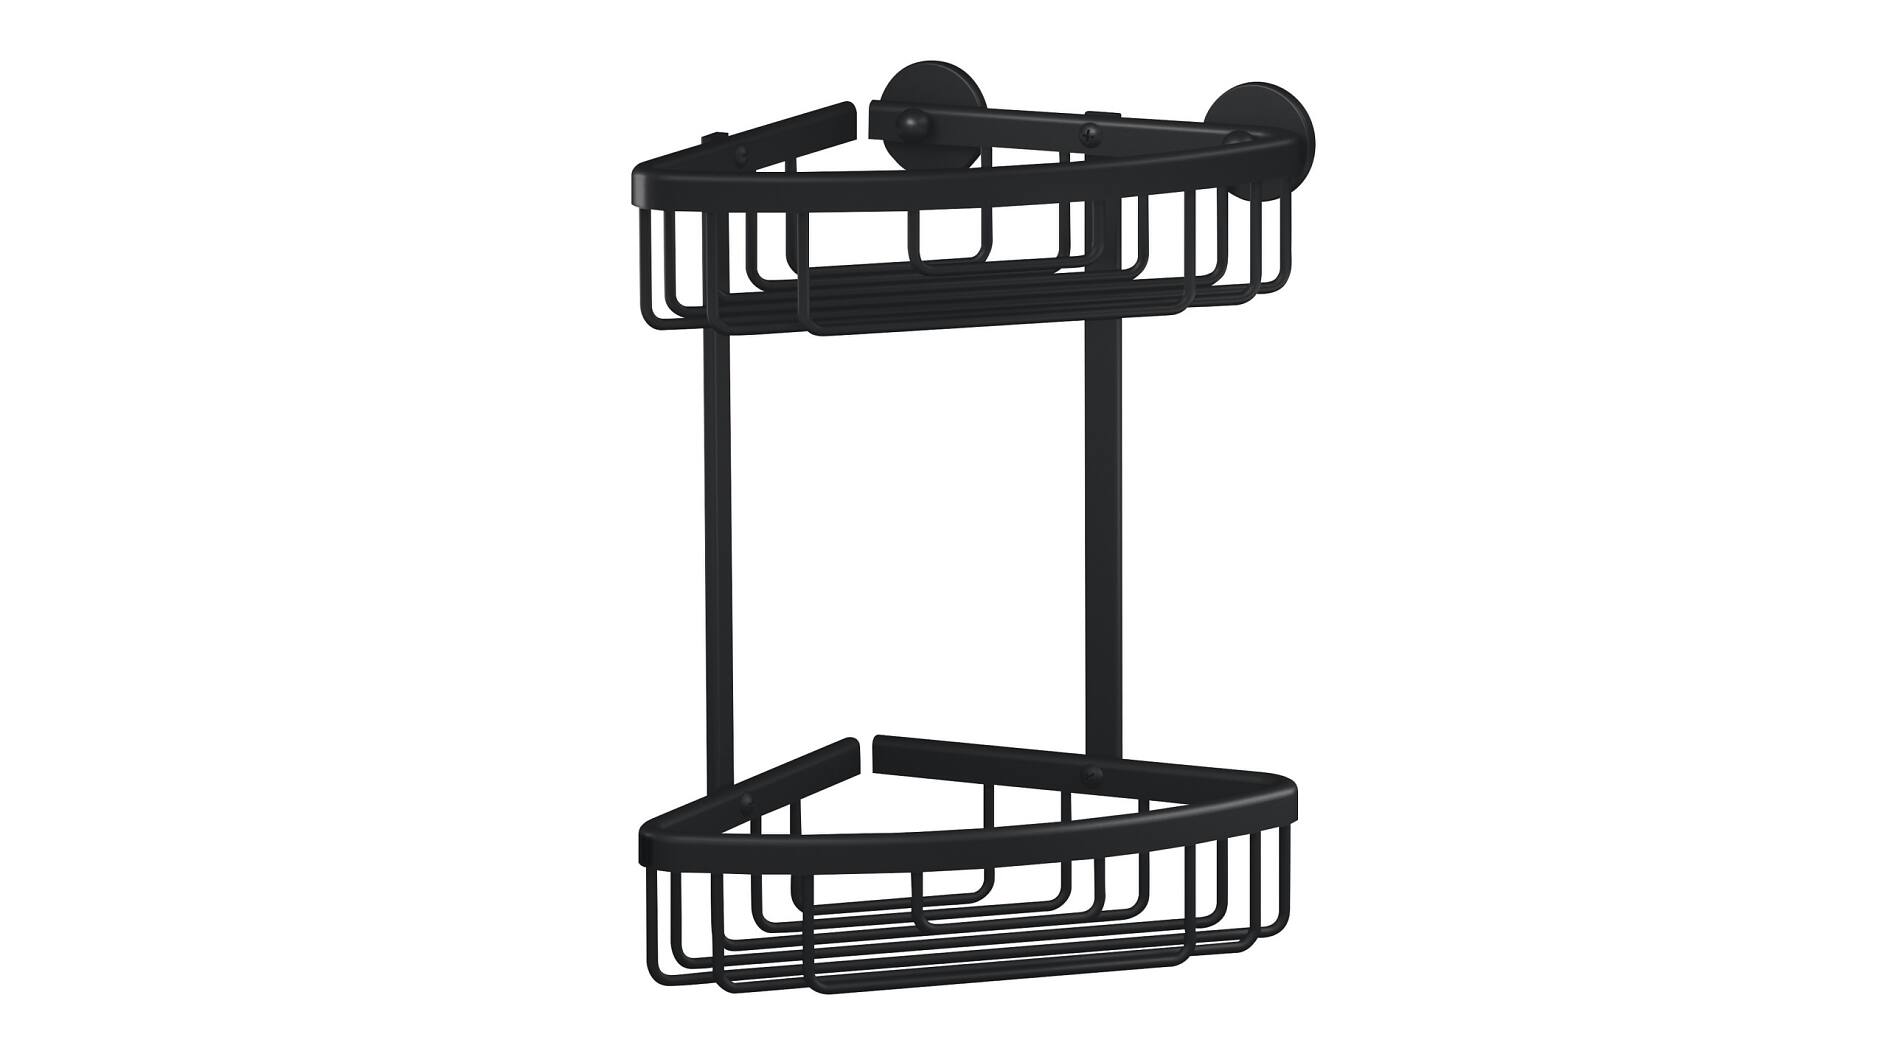 tesa® ALUXX Black Double Corner Basket, Self-Adhesive, Anodized